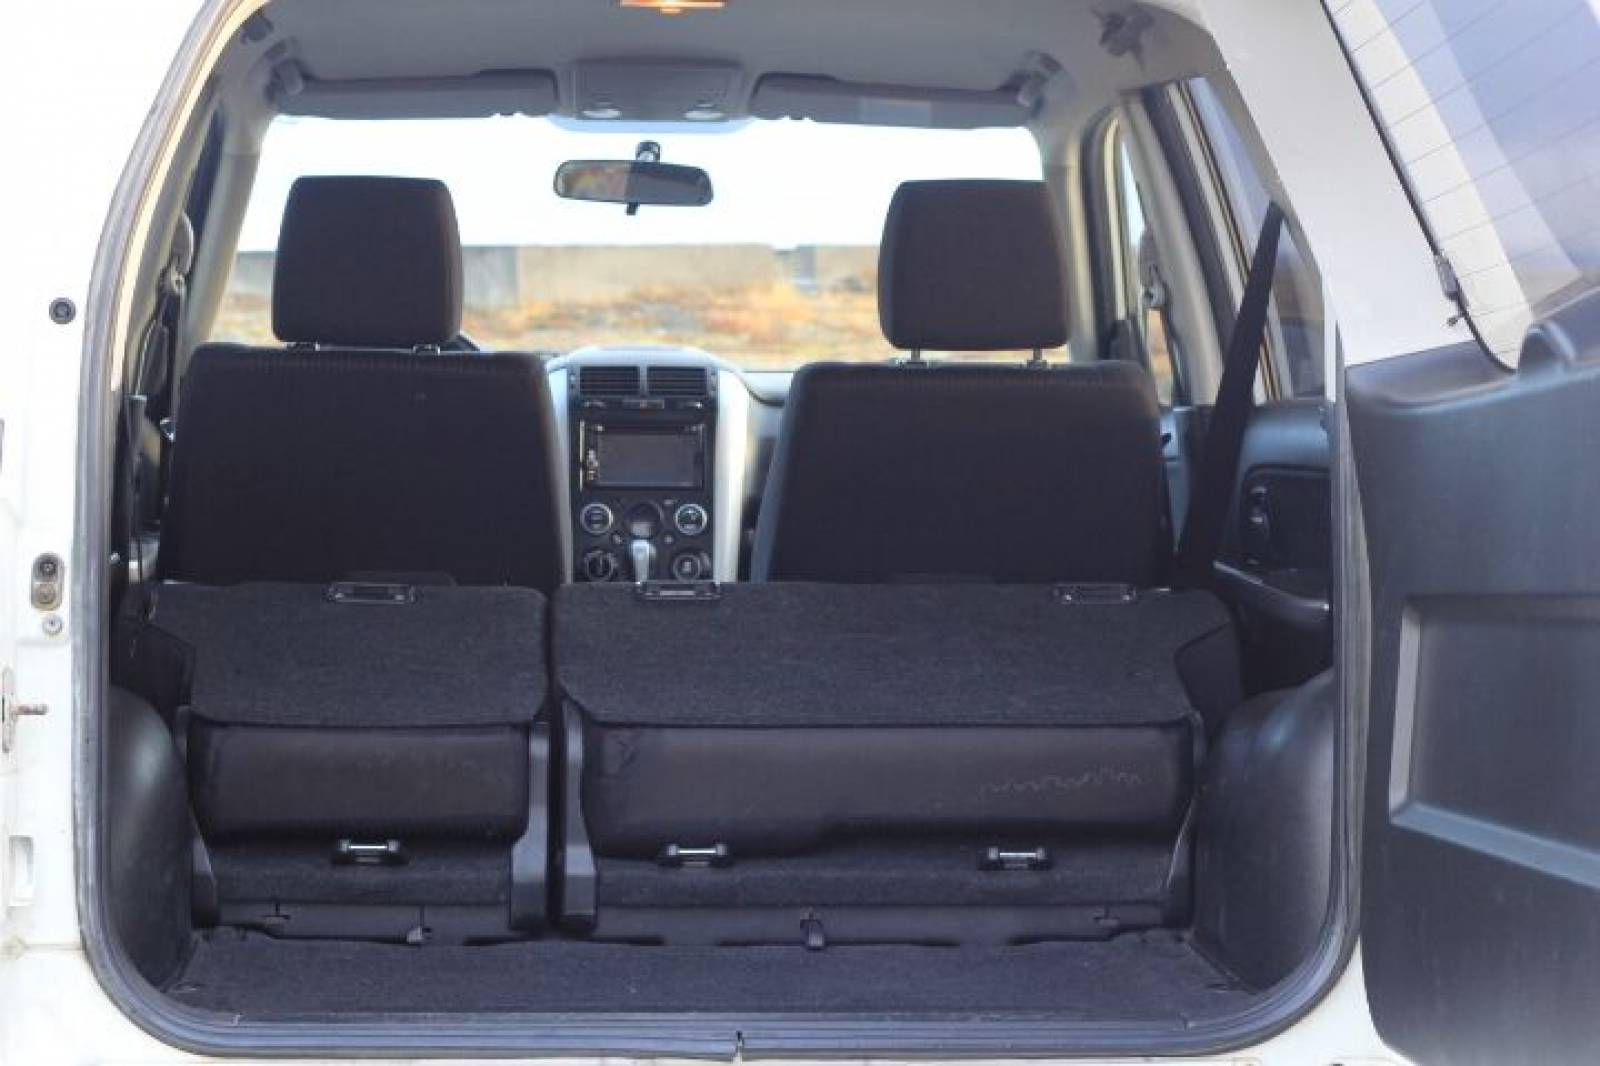 Suzuki Grand Vitara luggage space with back seats folded